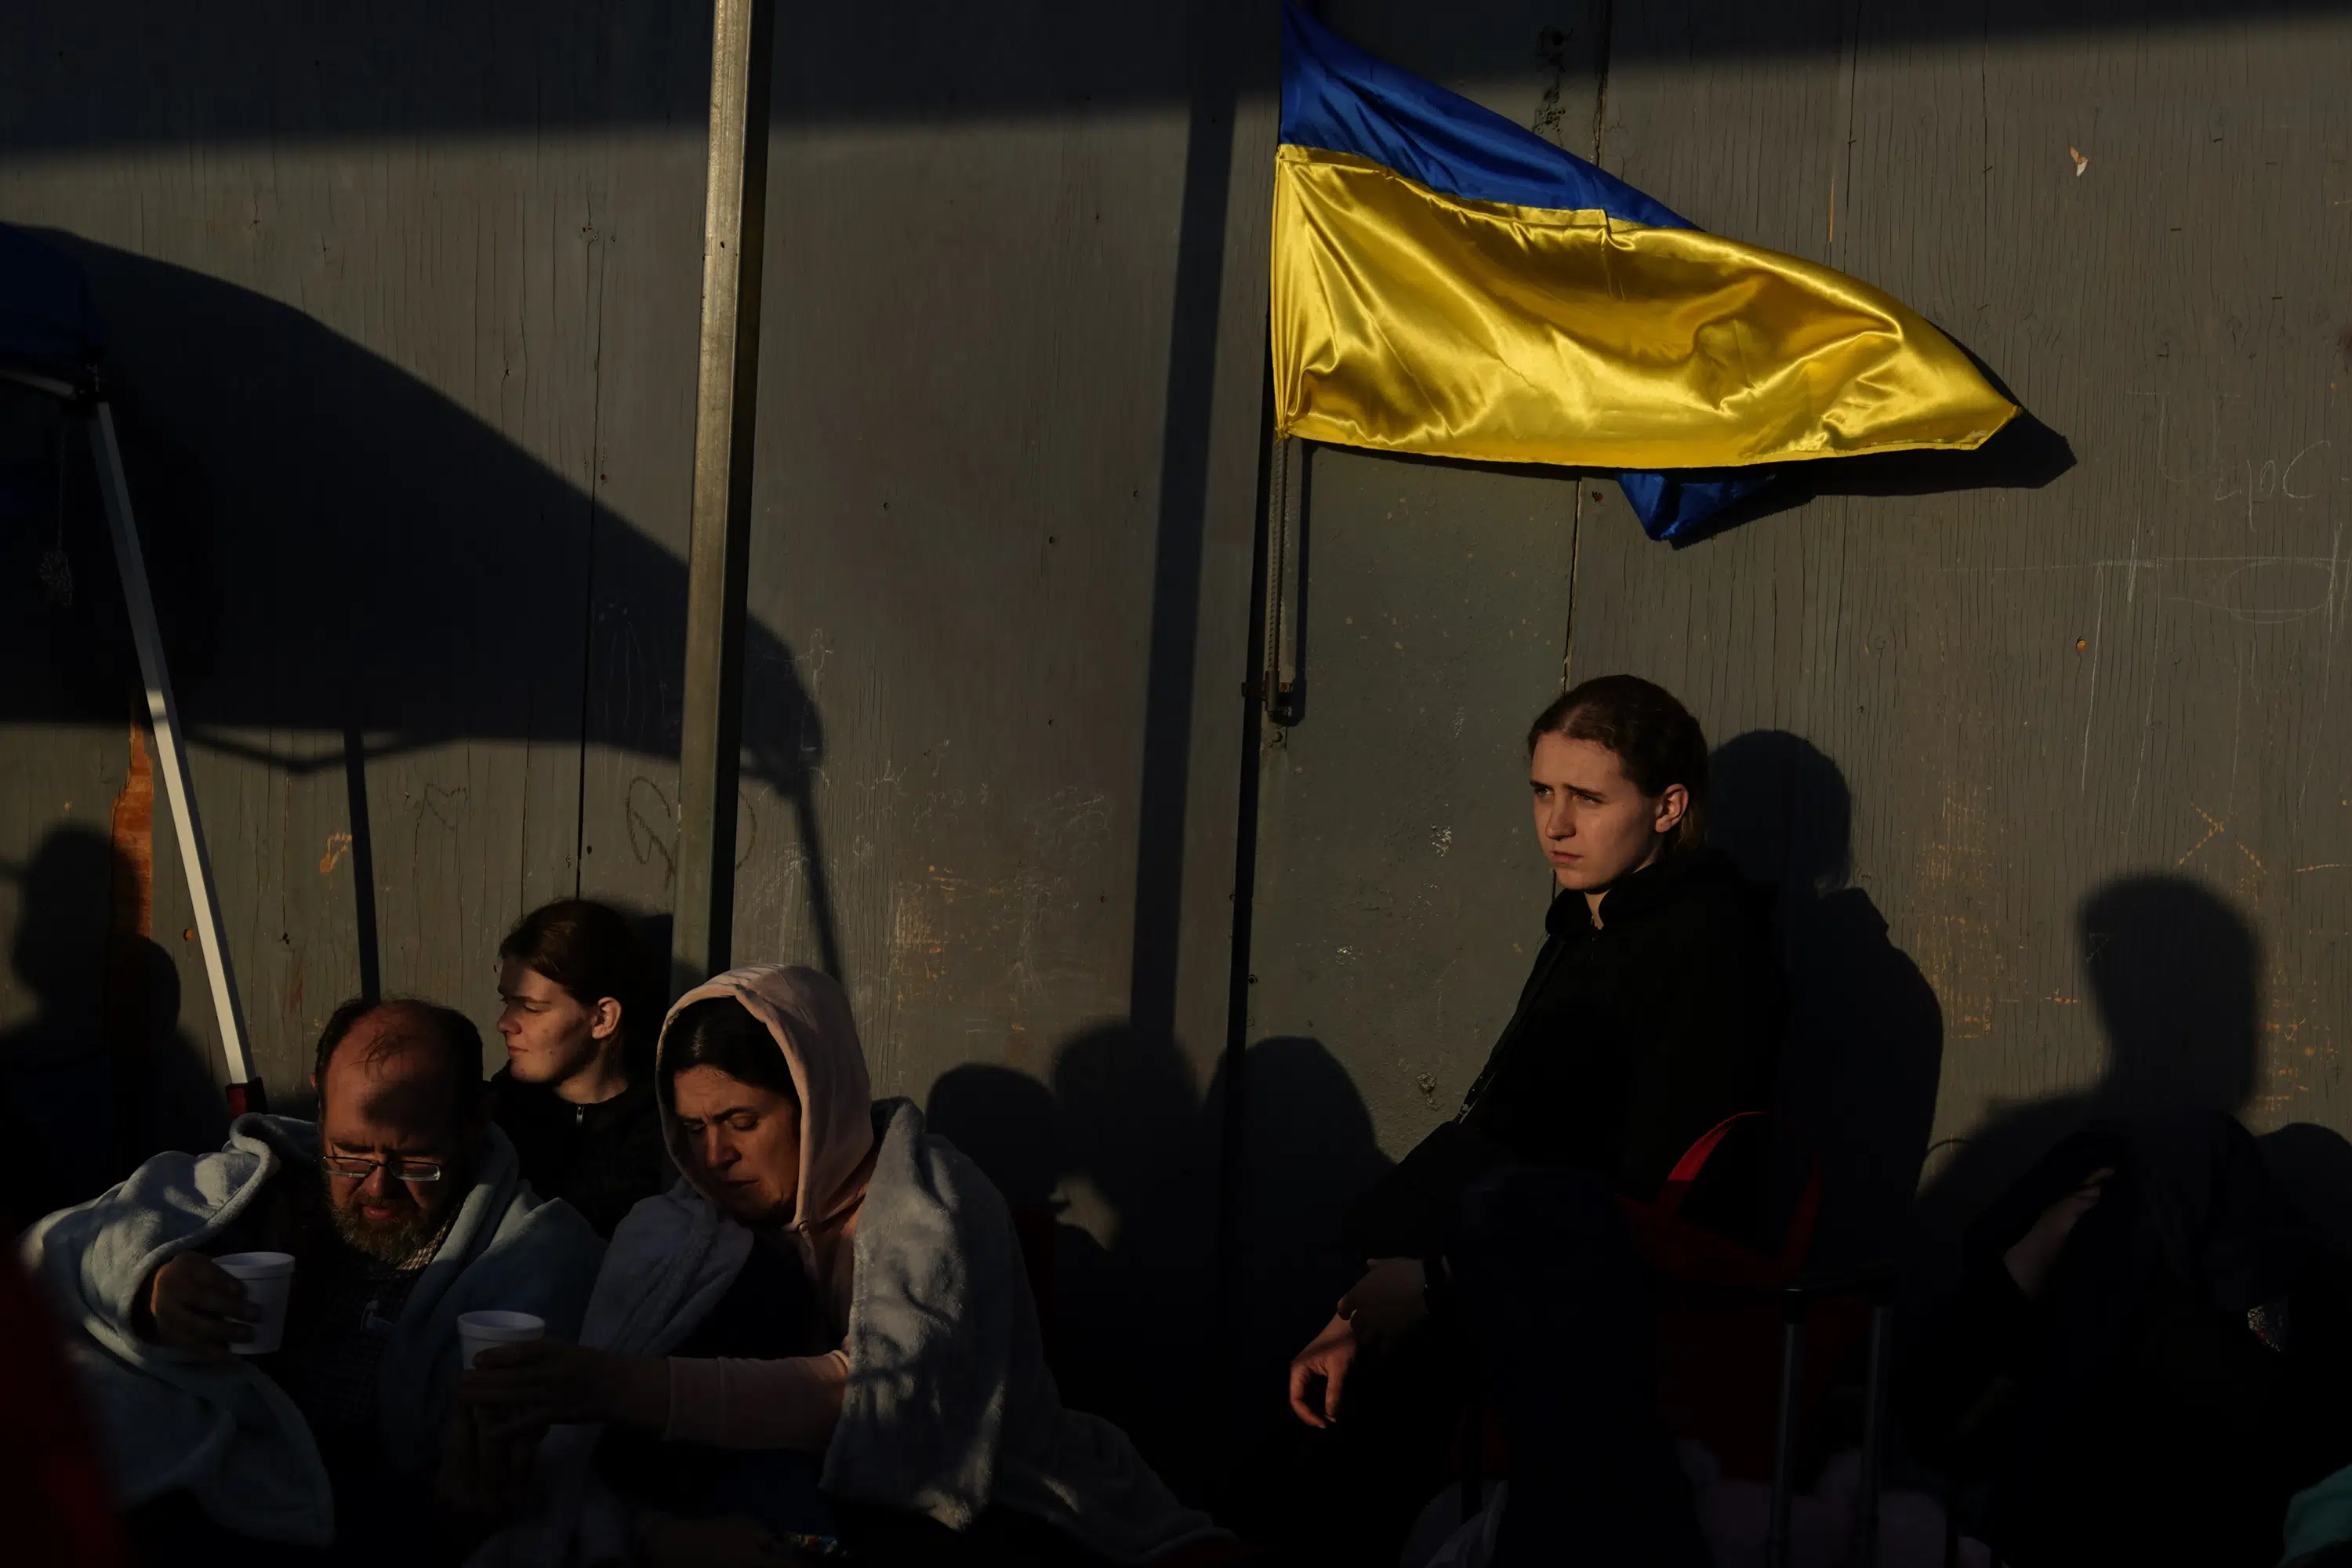 How those fleeing Ukraine inspired US border policies